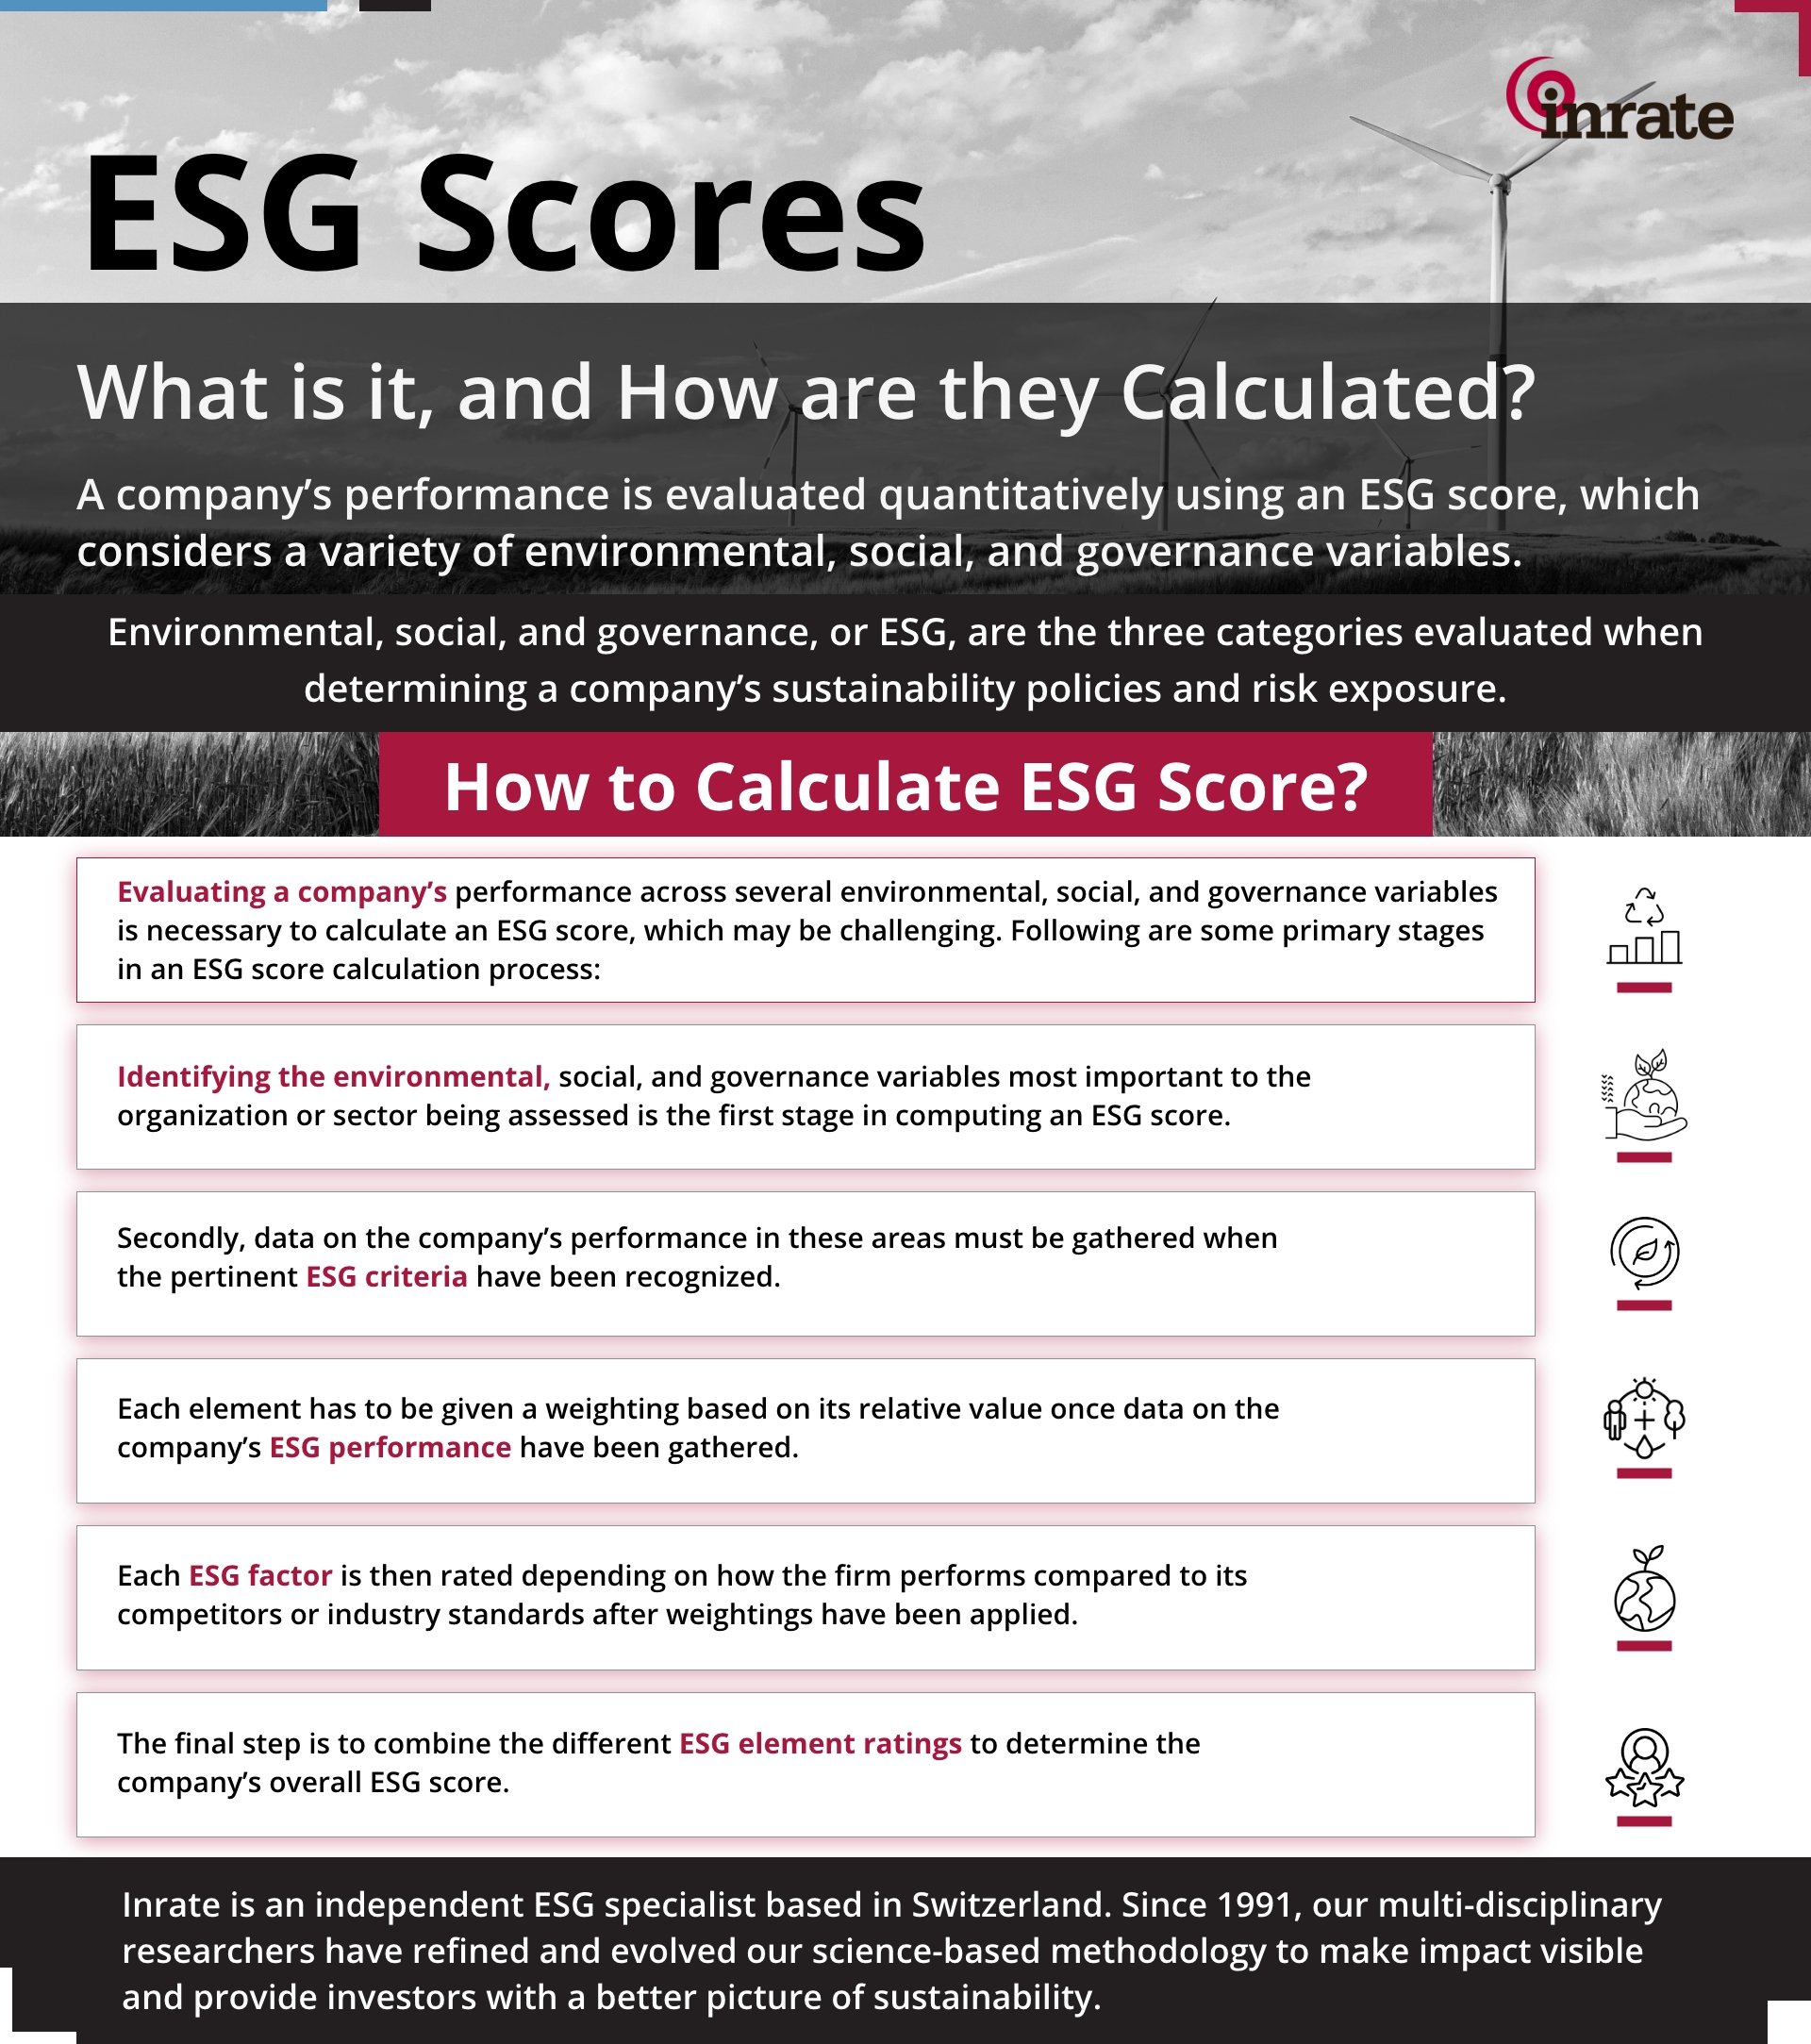 How to calculate ESG score